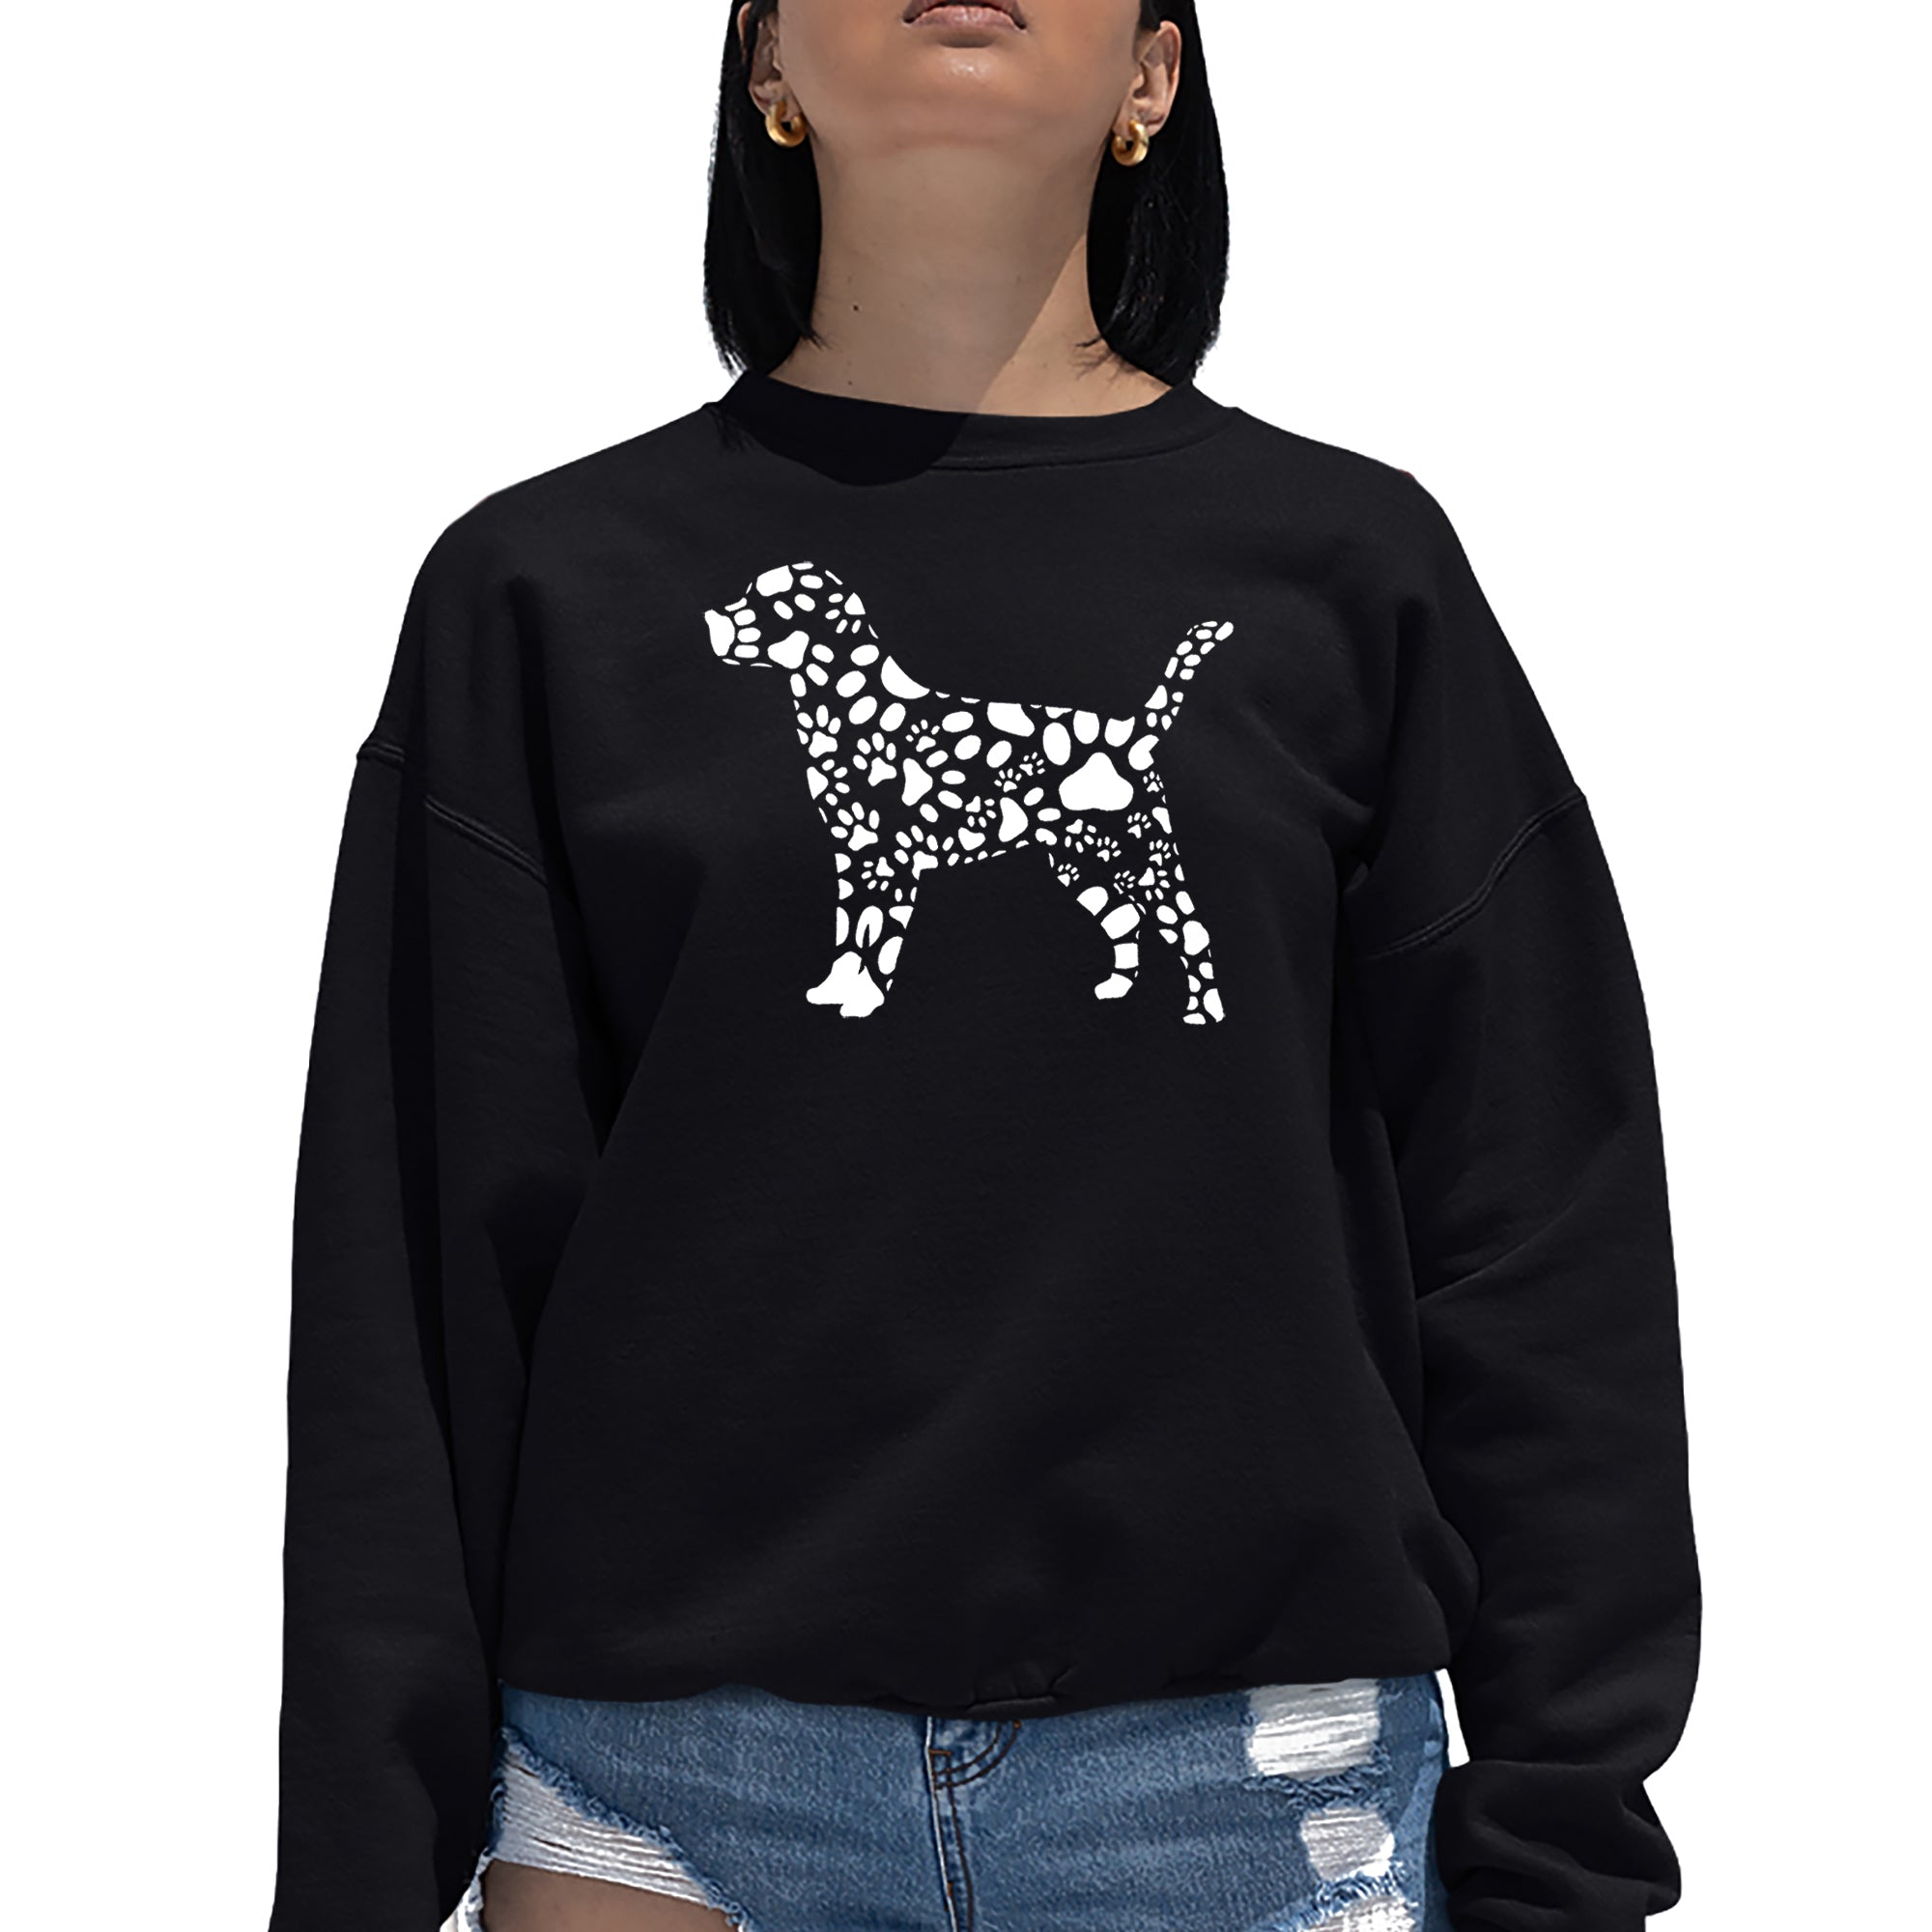 Dog Paw Prints - Women's Word Art Crewneck Sweatshirt - Black - Medium